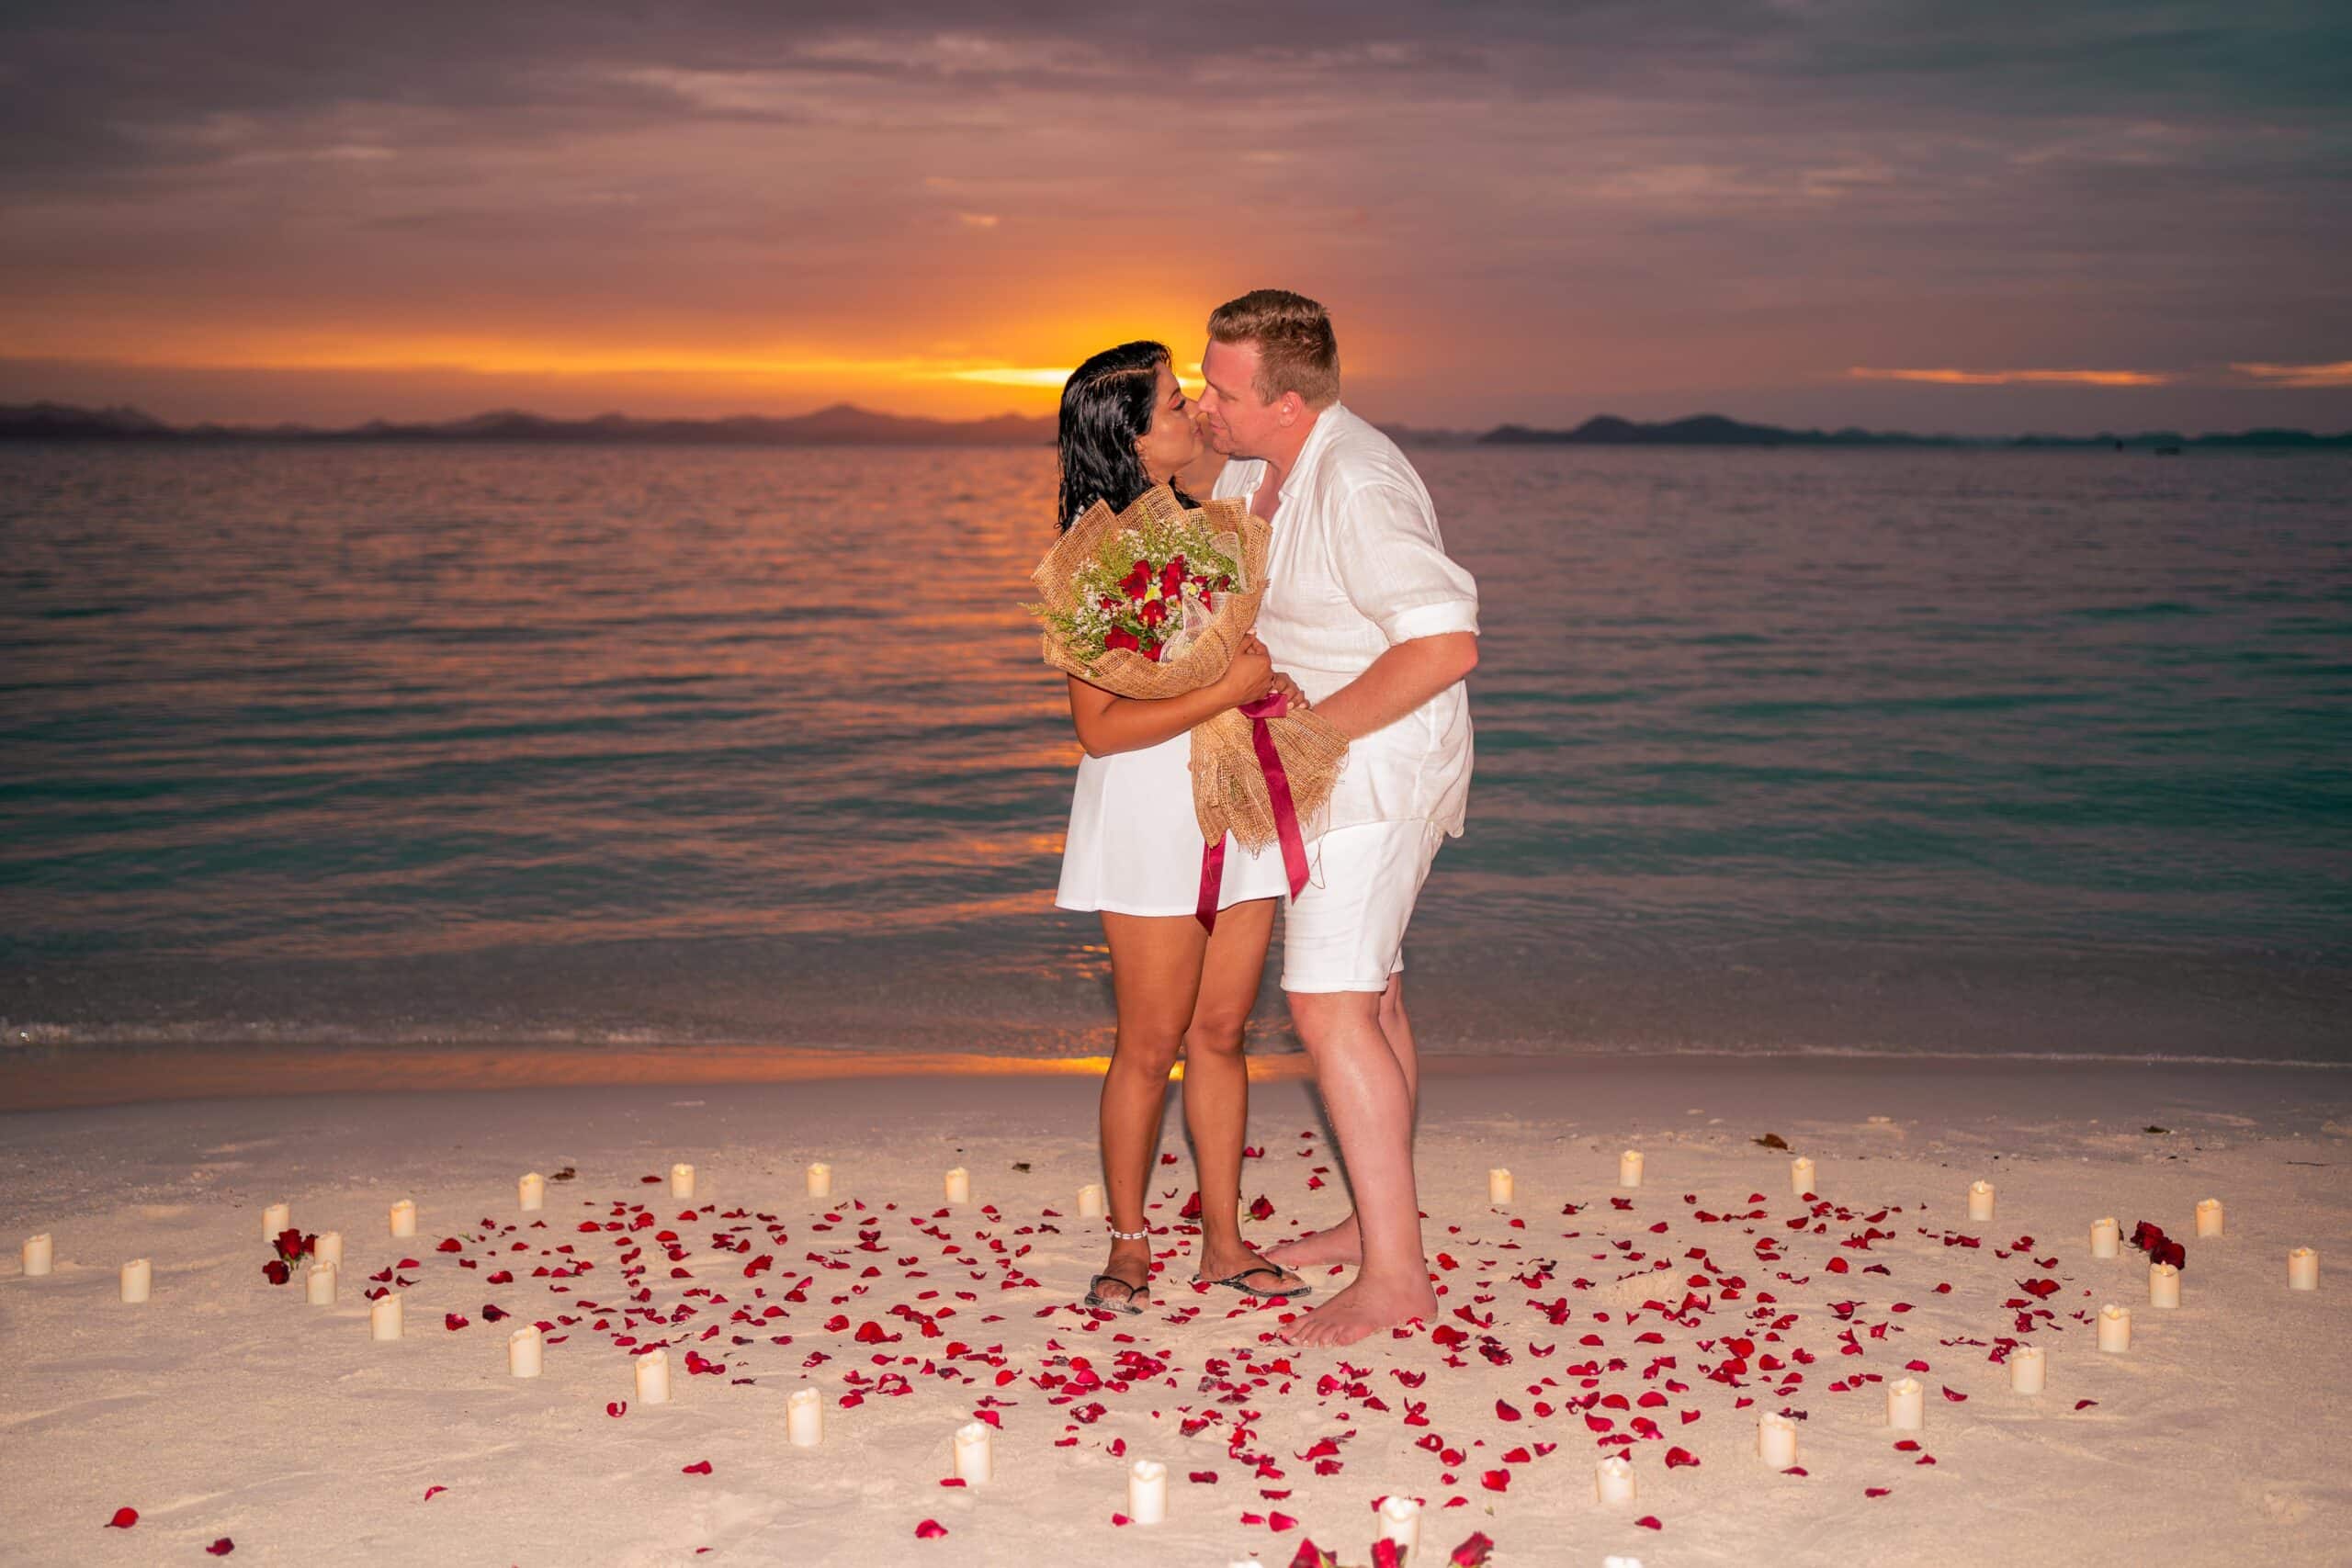 Best sunset beach for a wedding proposal in Coron, Palawan